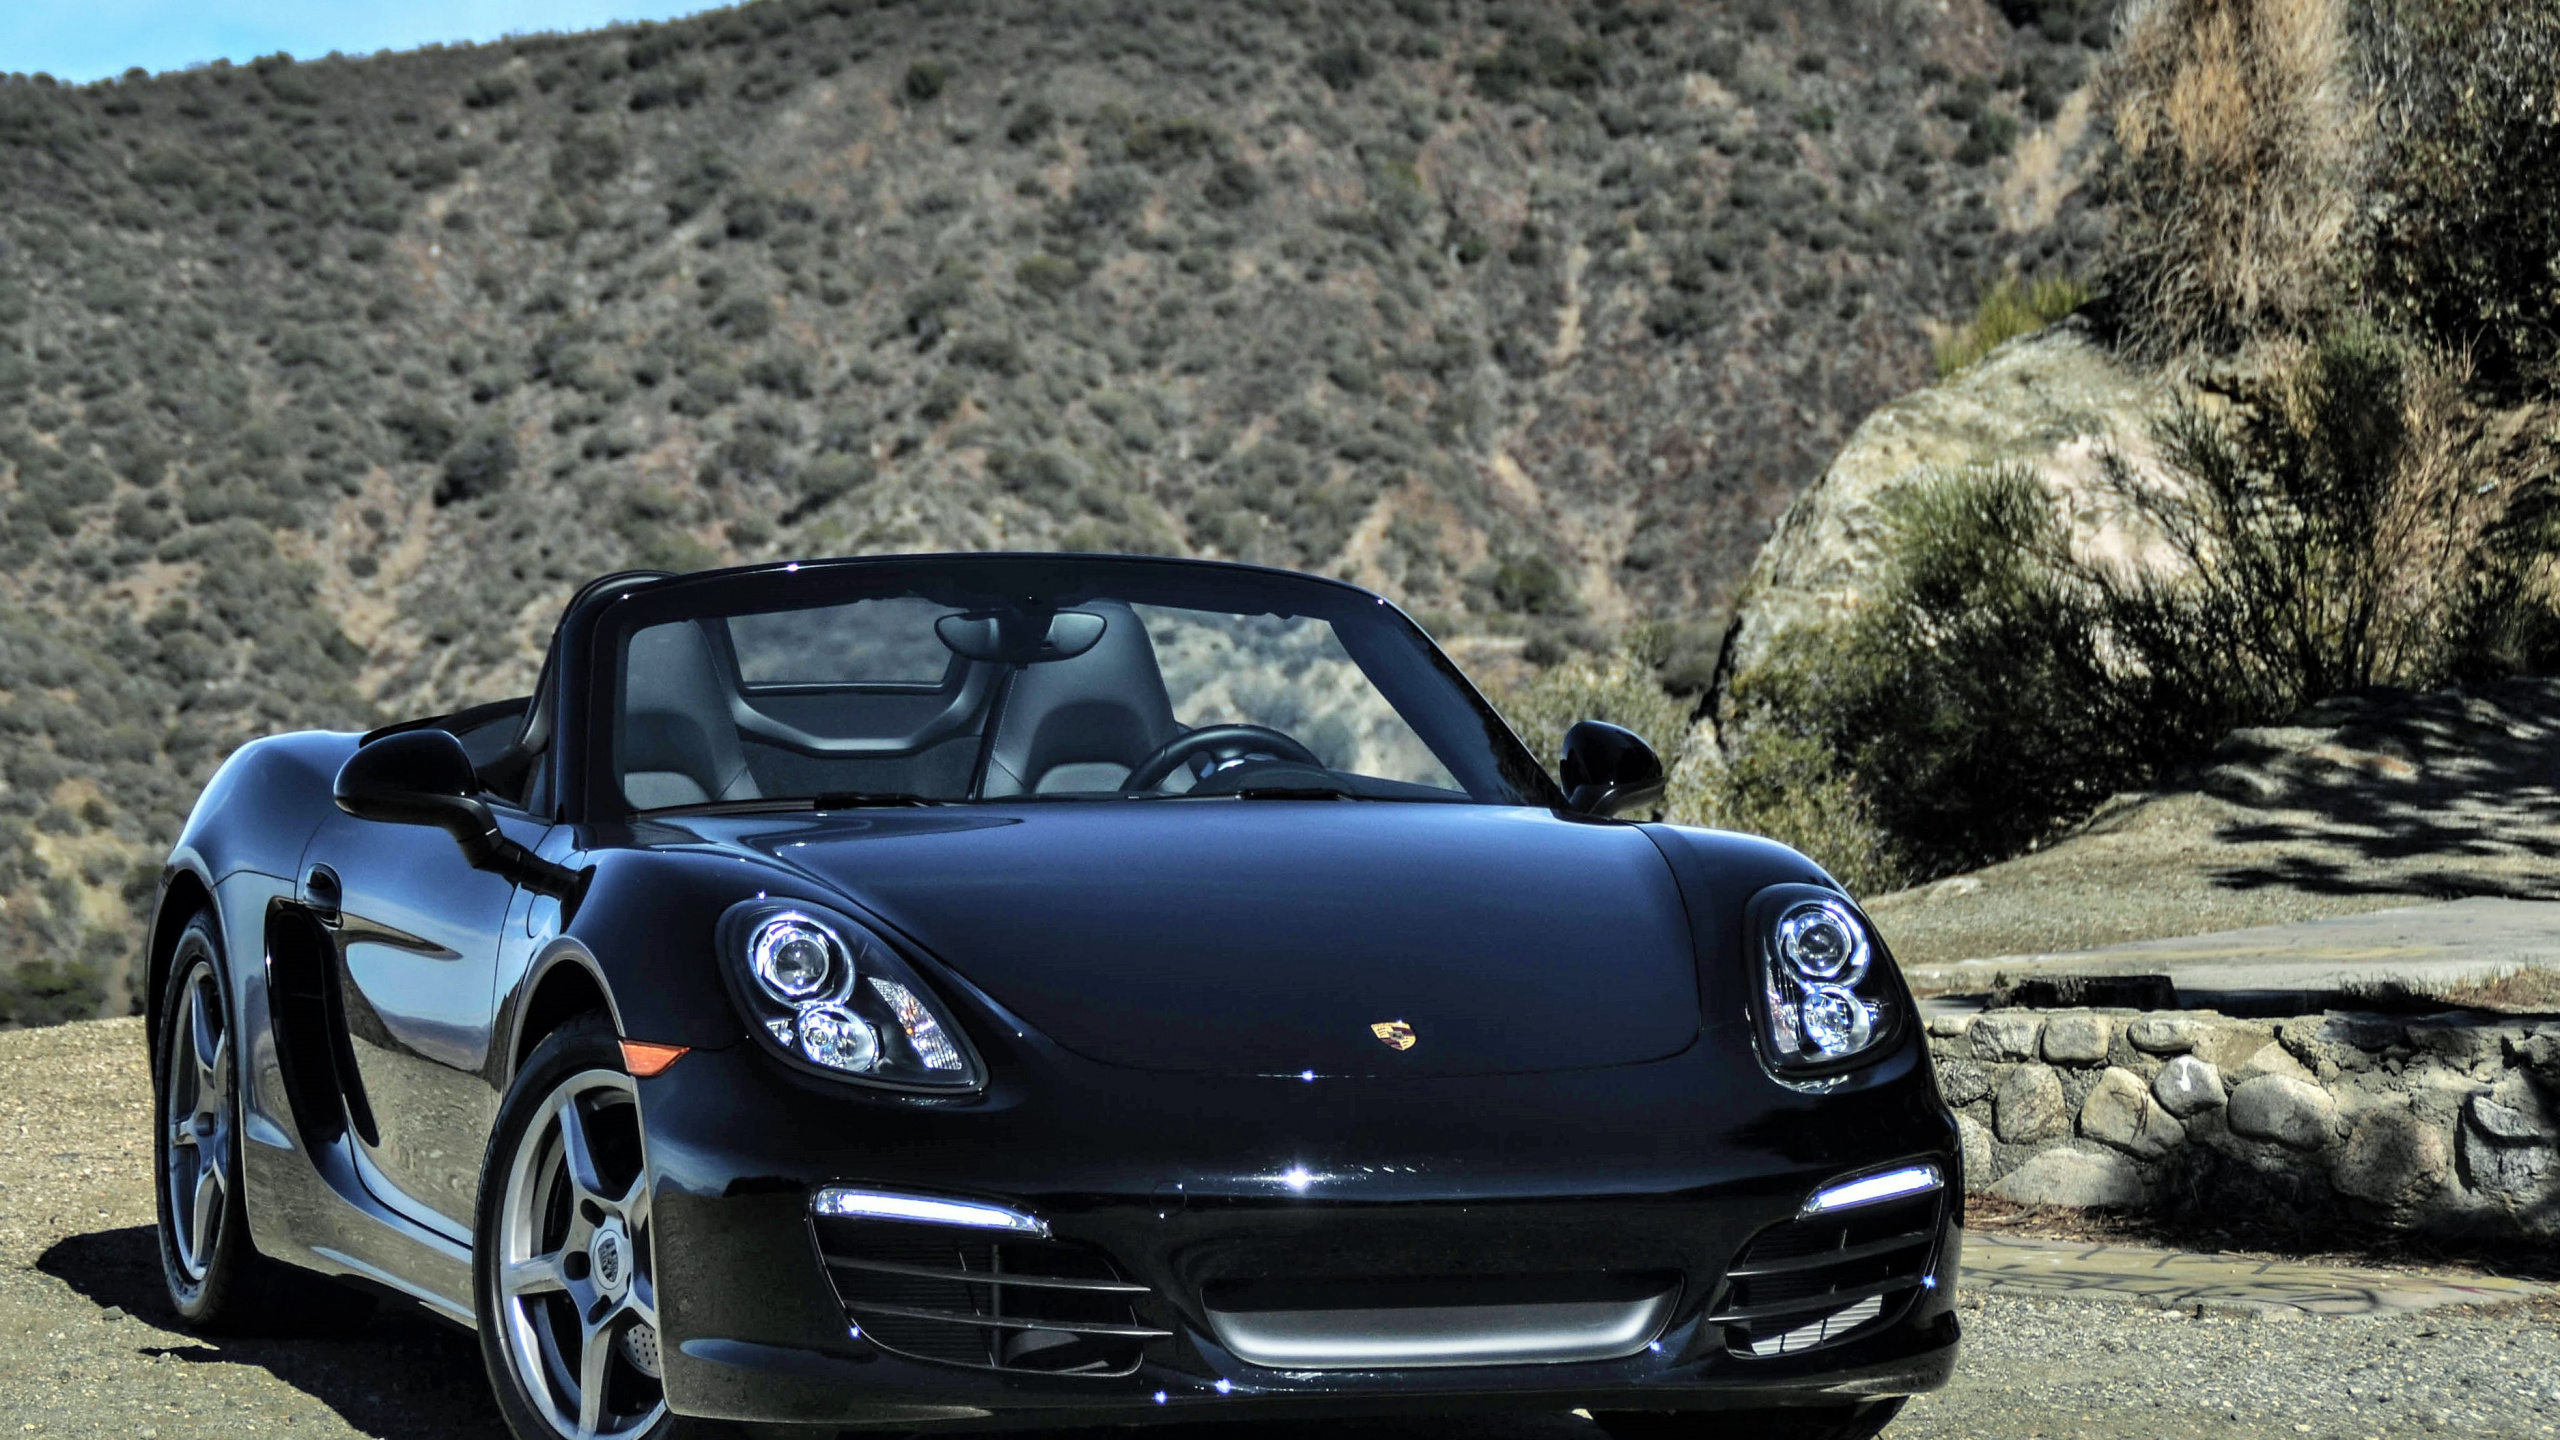 Black Porsche 911 on Brown Dirt Road During Daytime. Wallpaper in 2560x1440 Resolution